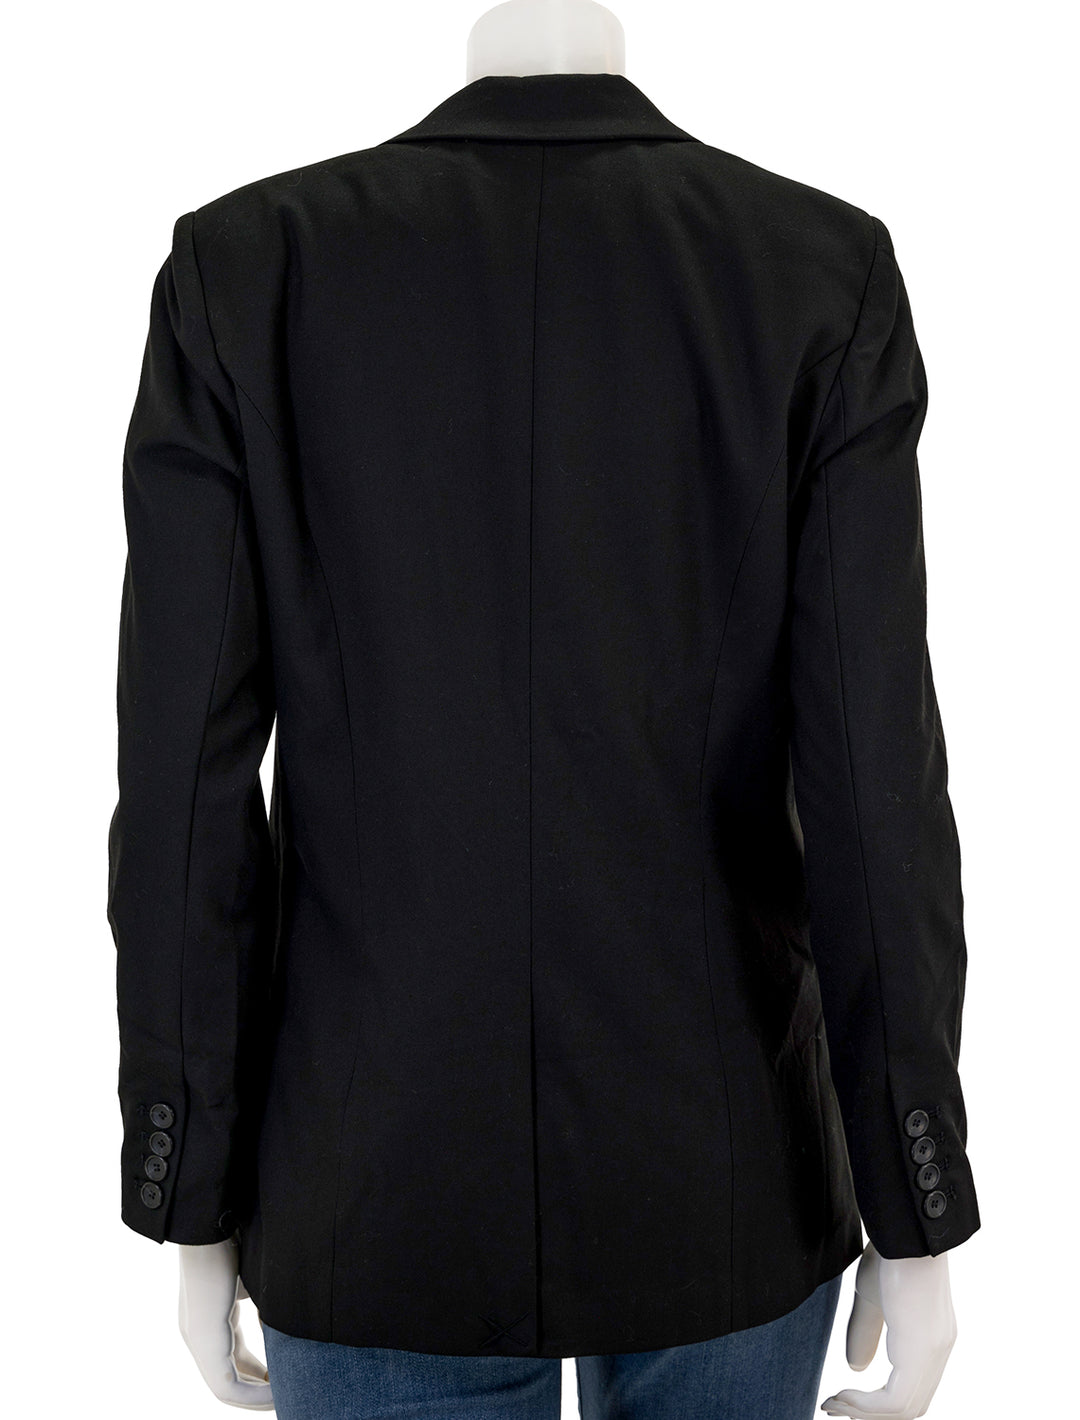 Back view of Rails' jac blazer in black twill.